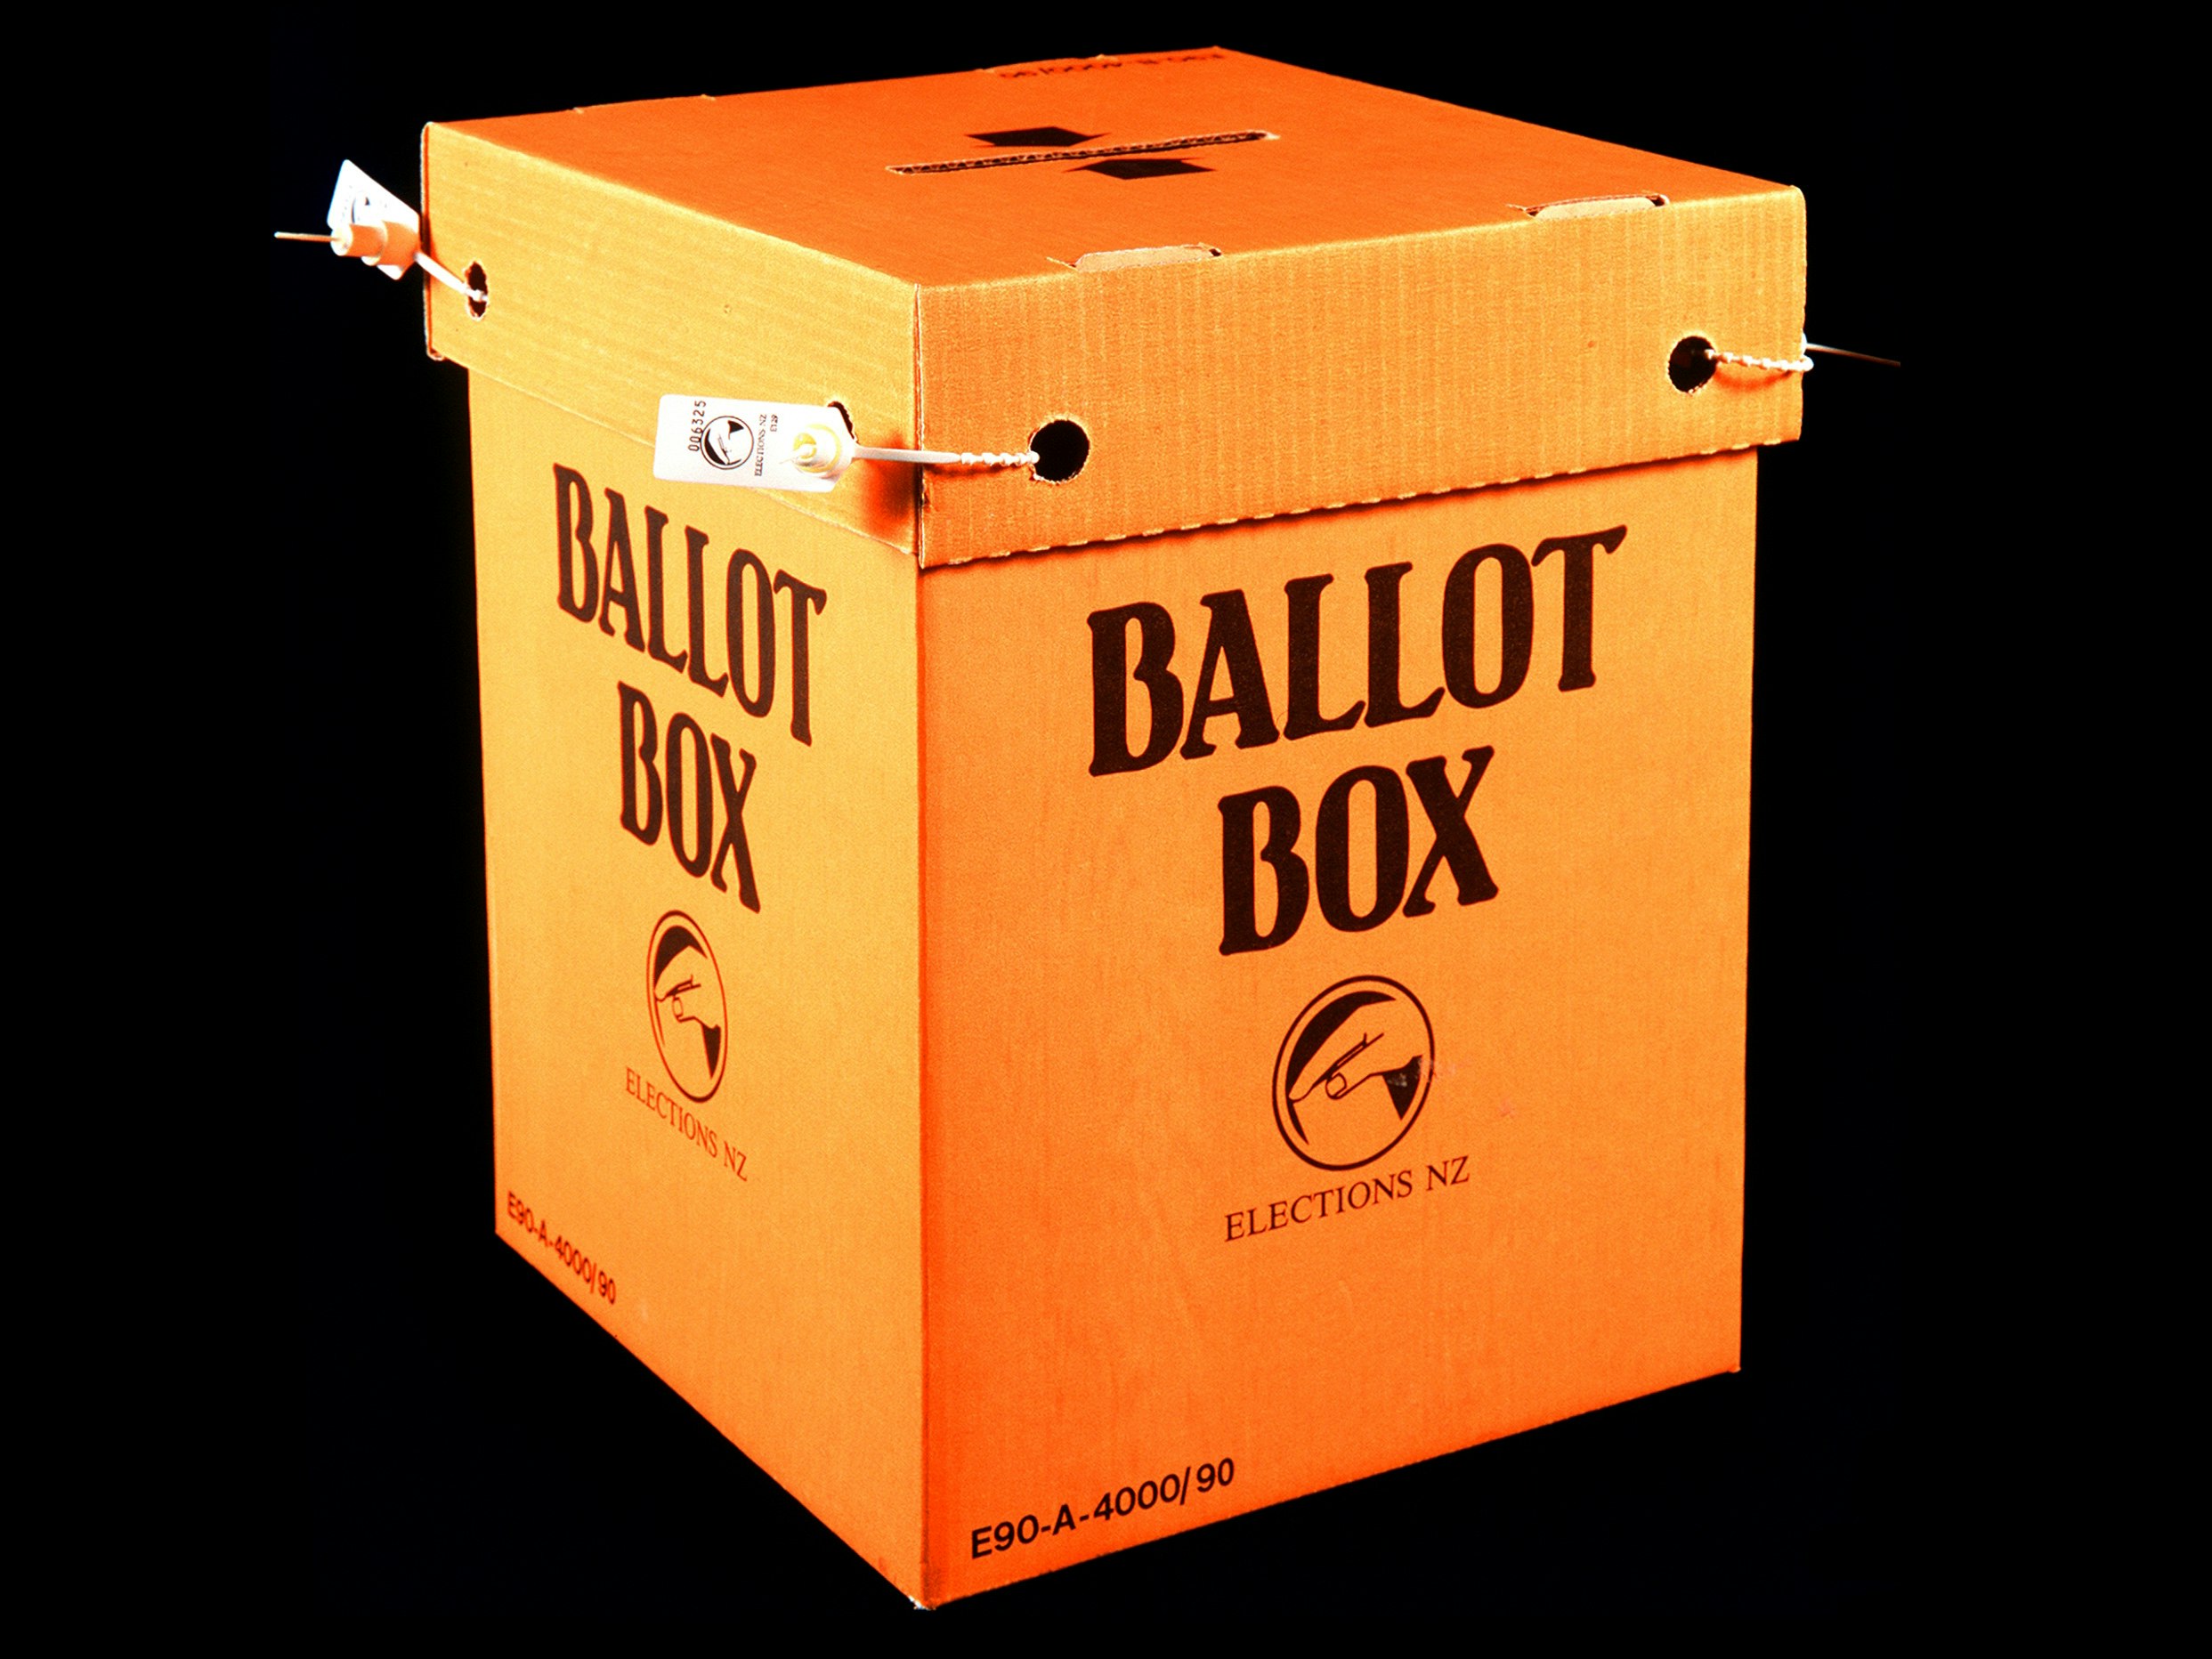 An orange cardboard box with Ballot Box written on the side